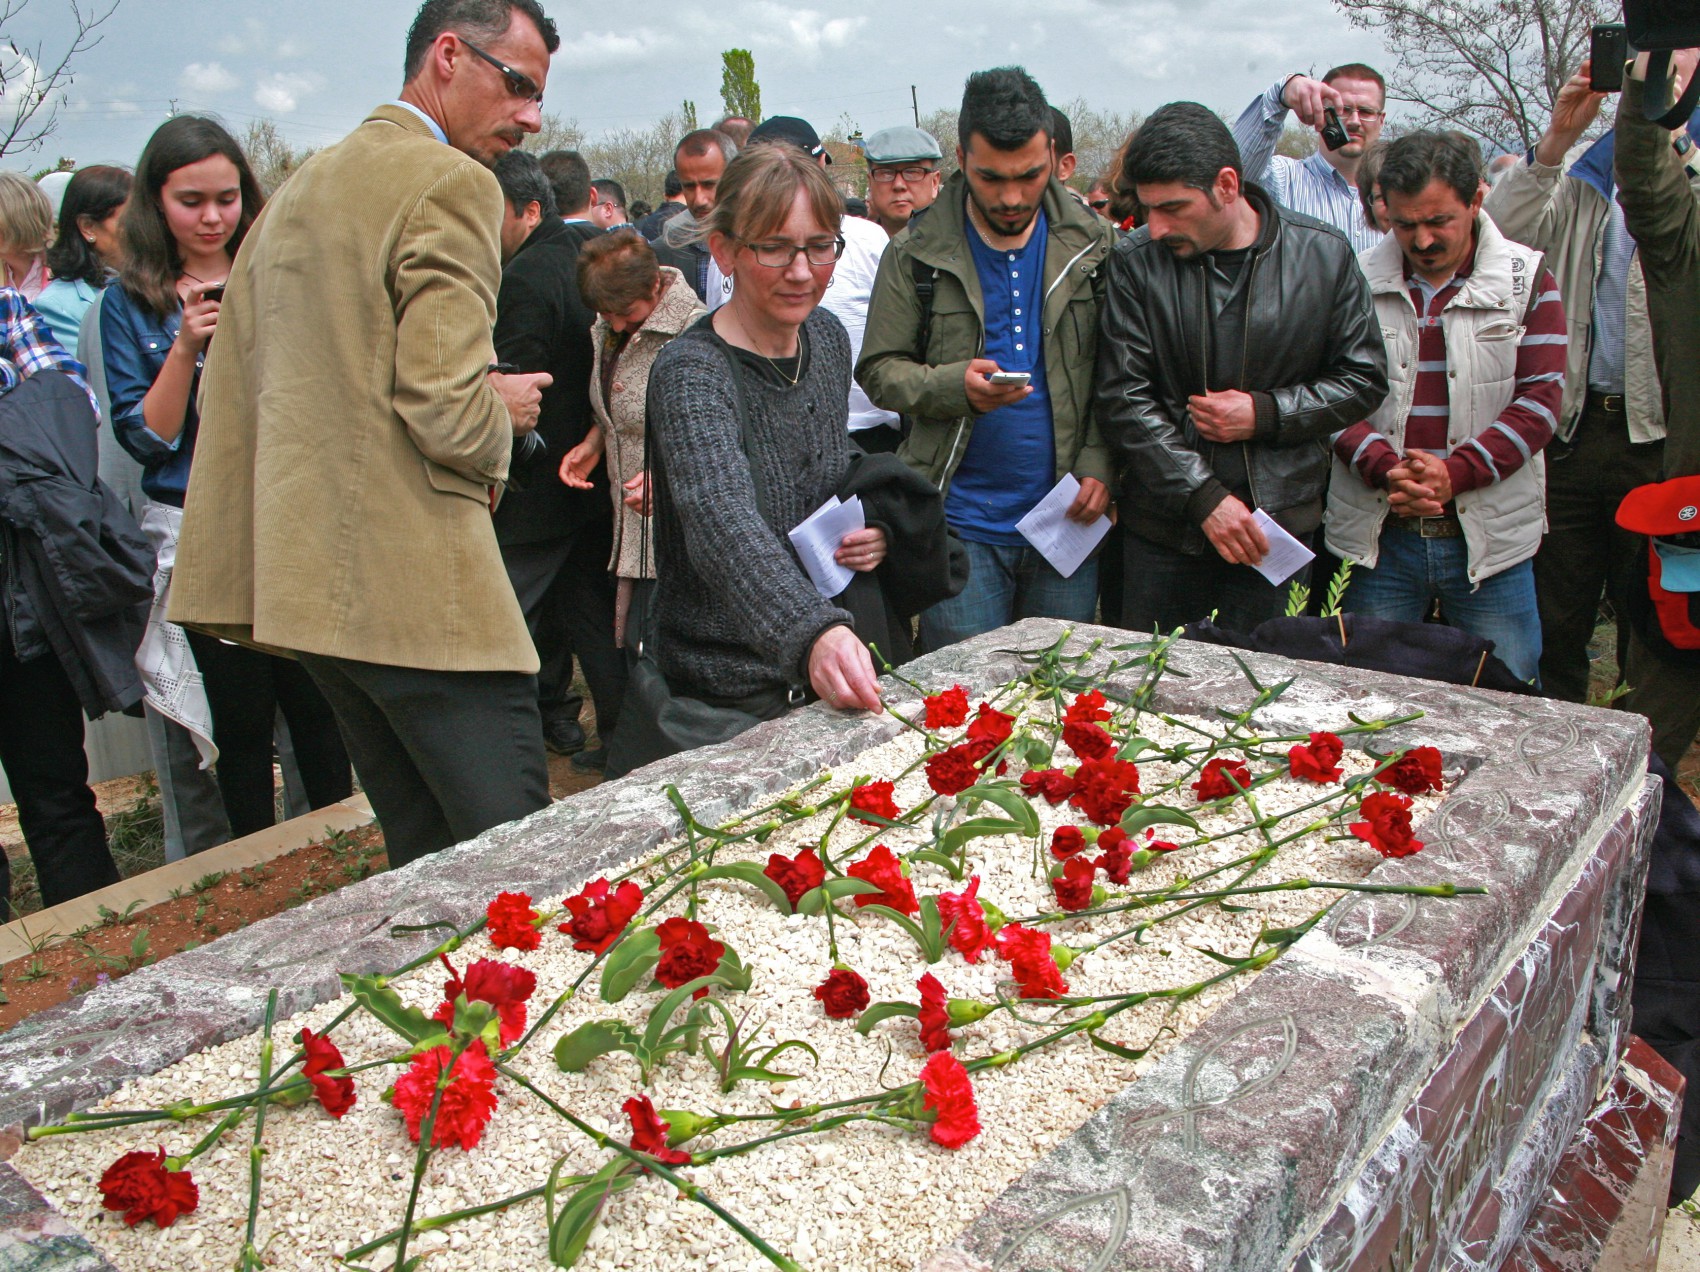 Susanne Geske, widow of martyr Tilmann Geske, after memorial ceremony for Uğur Yüksel. (Morning Star News)